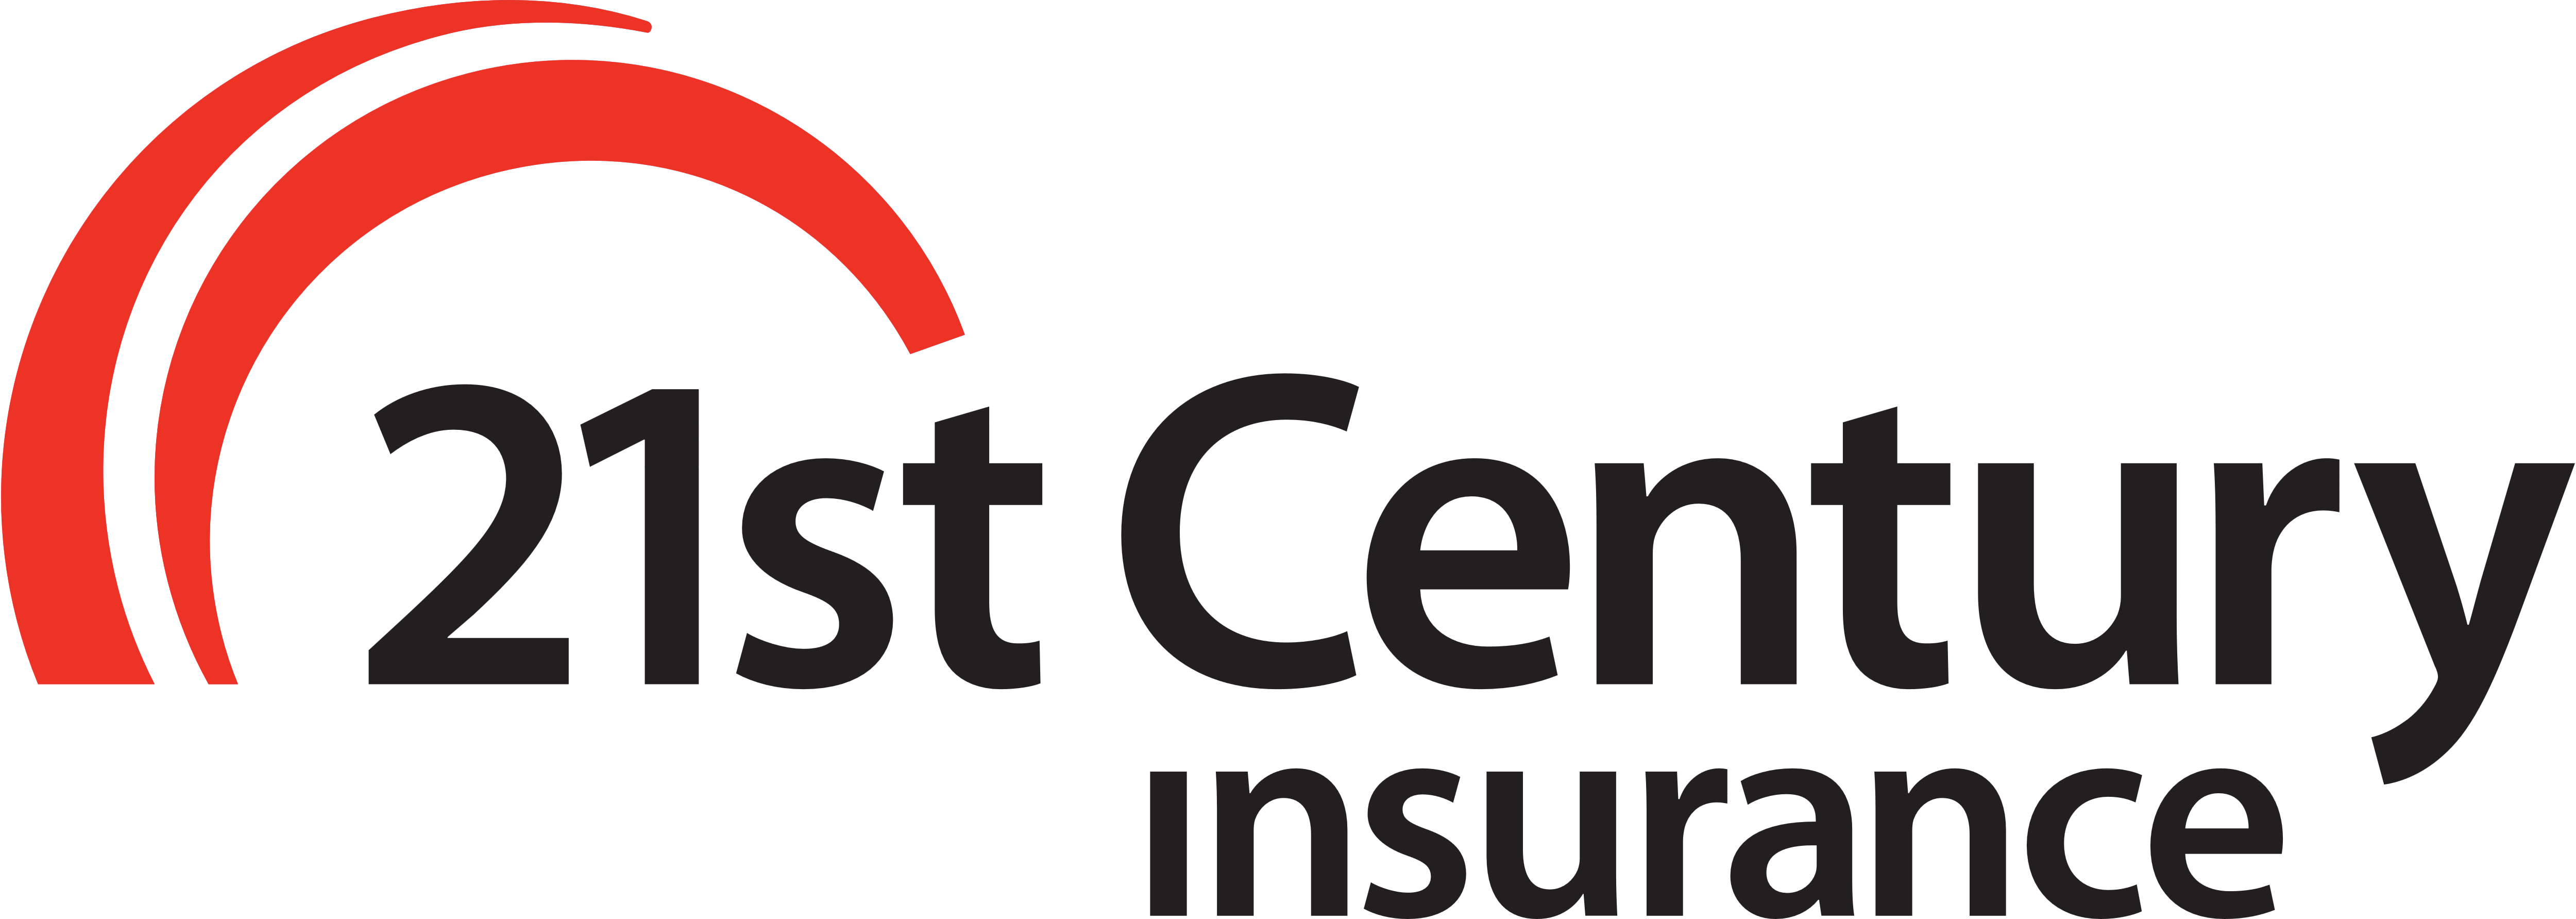 Century Logo - 21st Century Auto Insurance – Logos Download